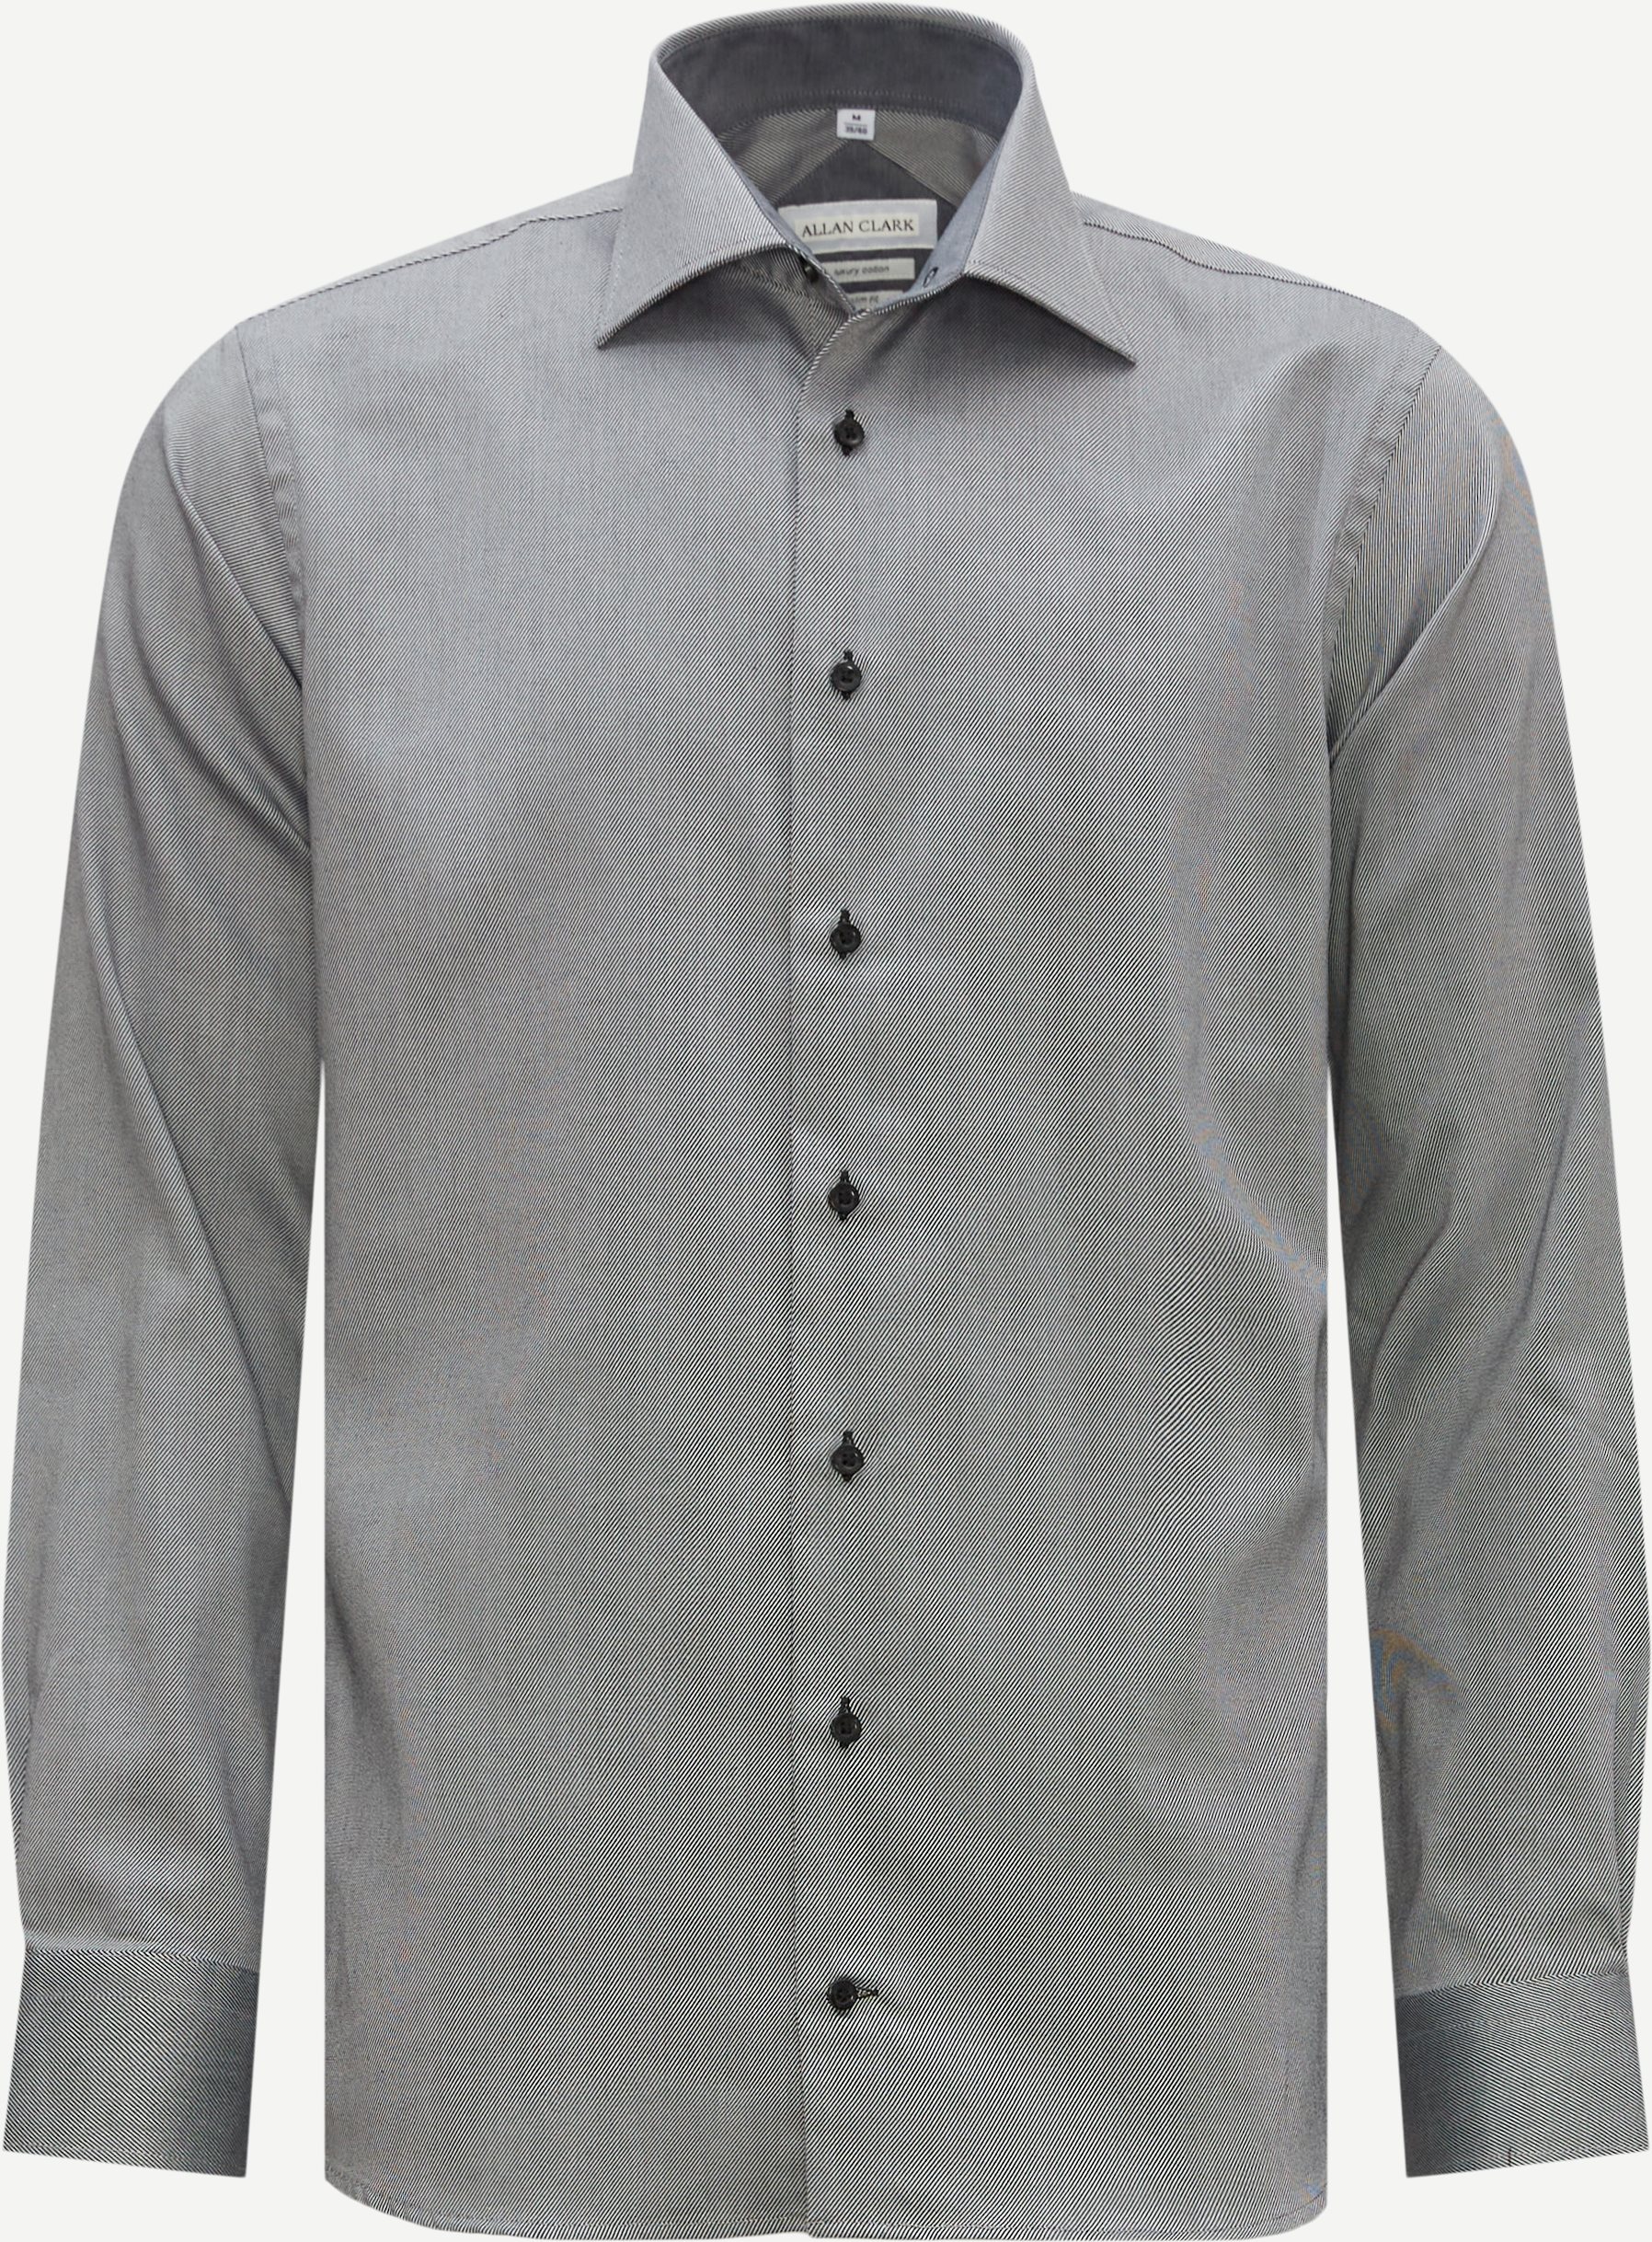 Allan Clark Shirts PRINCE. Grey